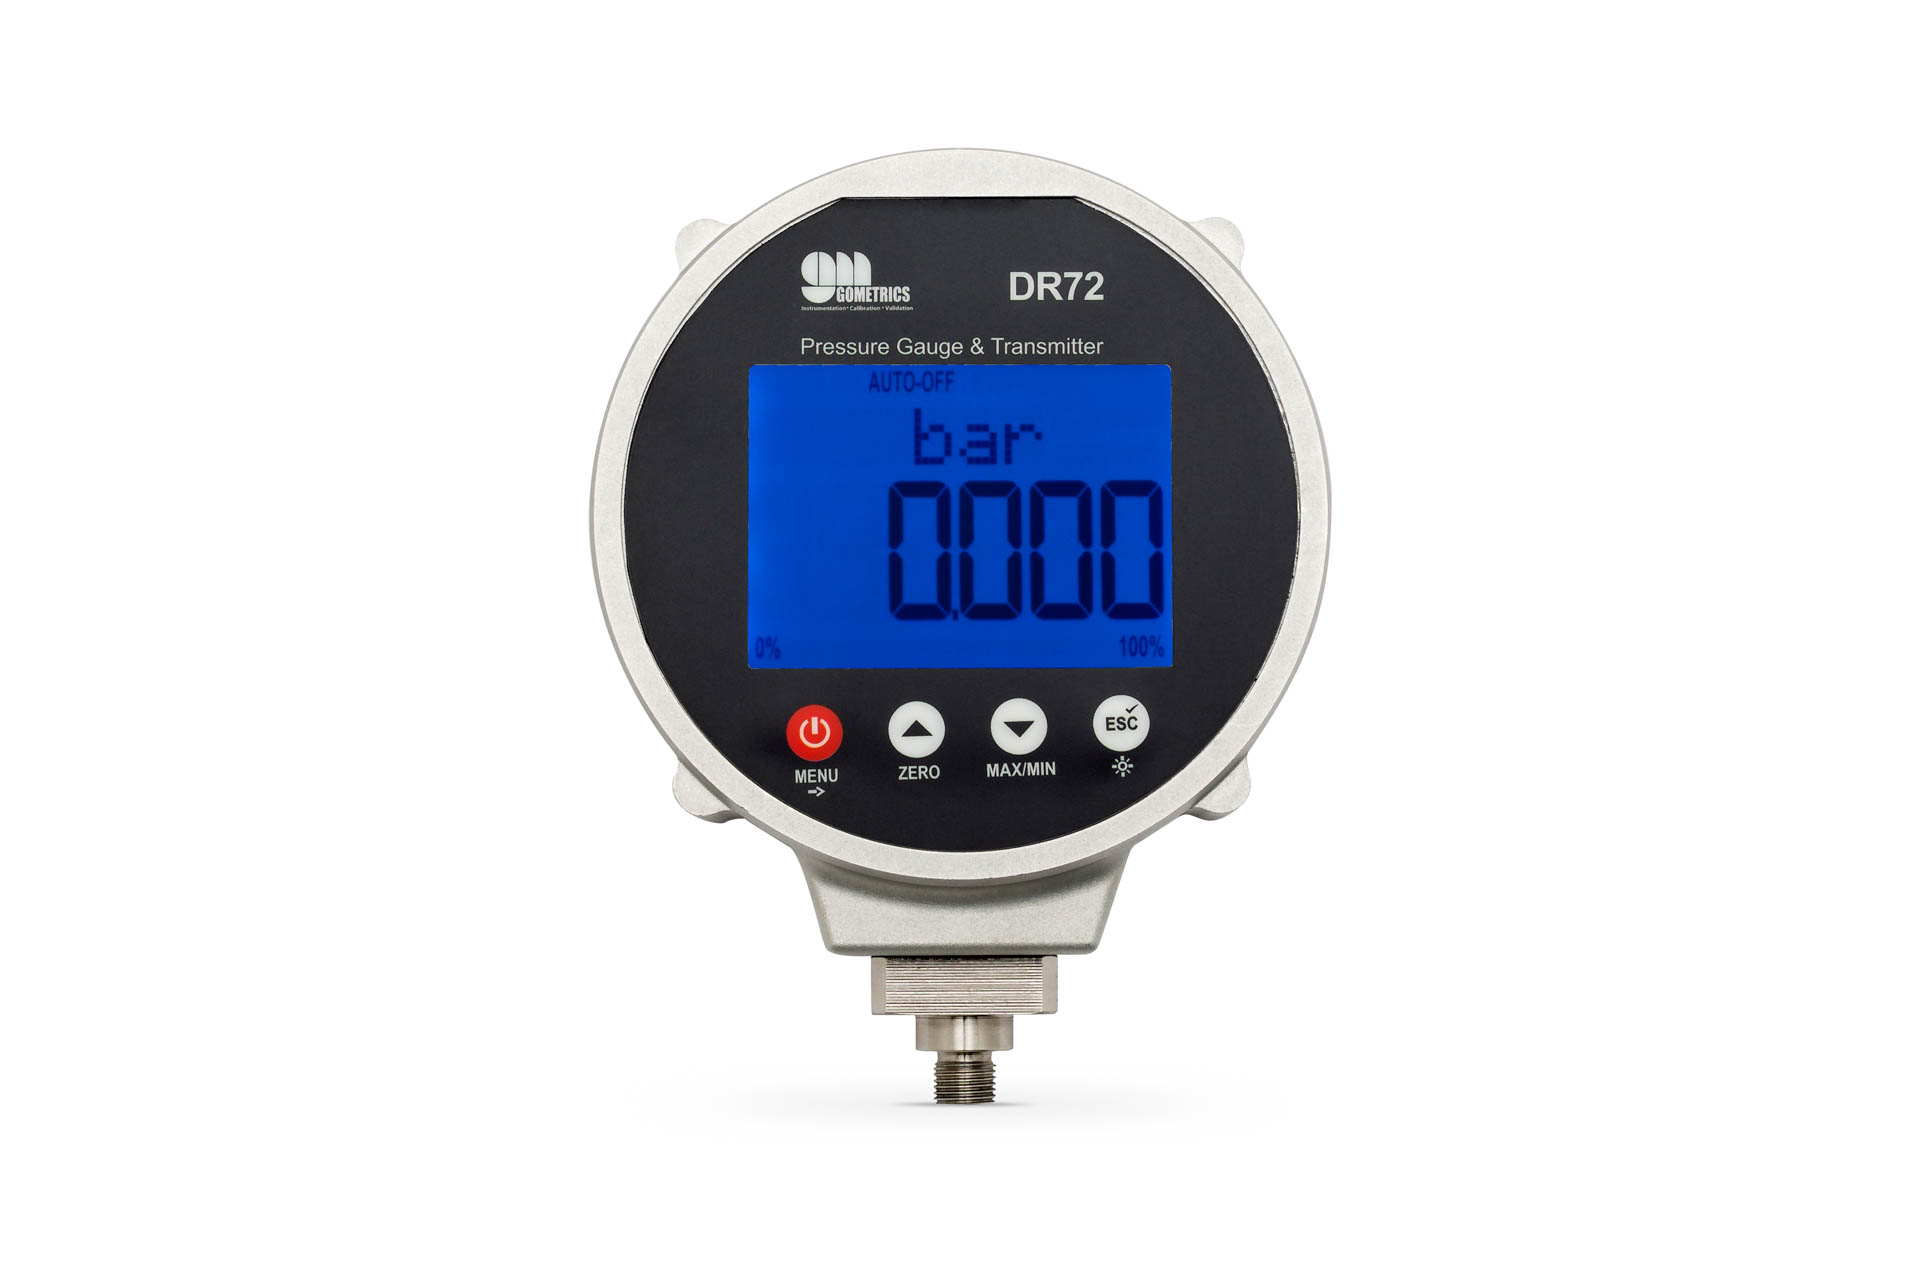 DR72 Digital Process and Calibration Pressure Gauge designed by